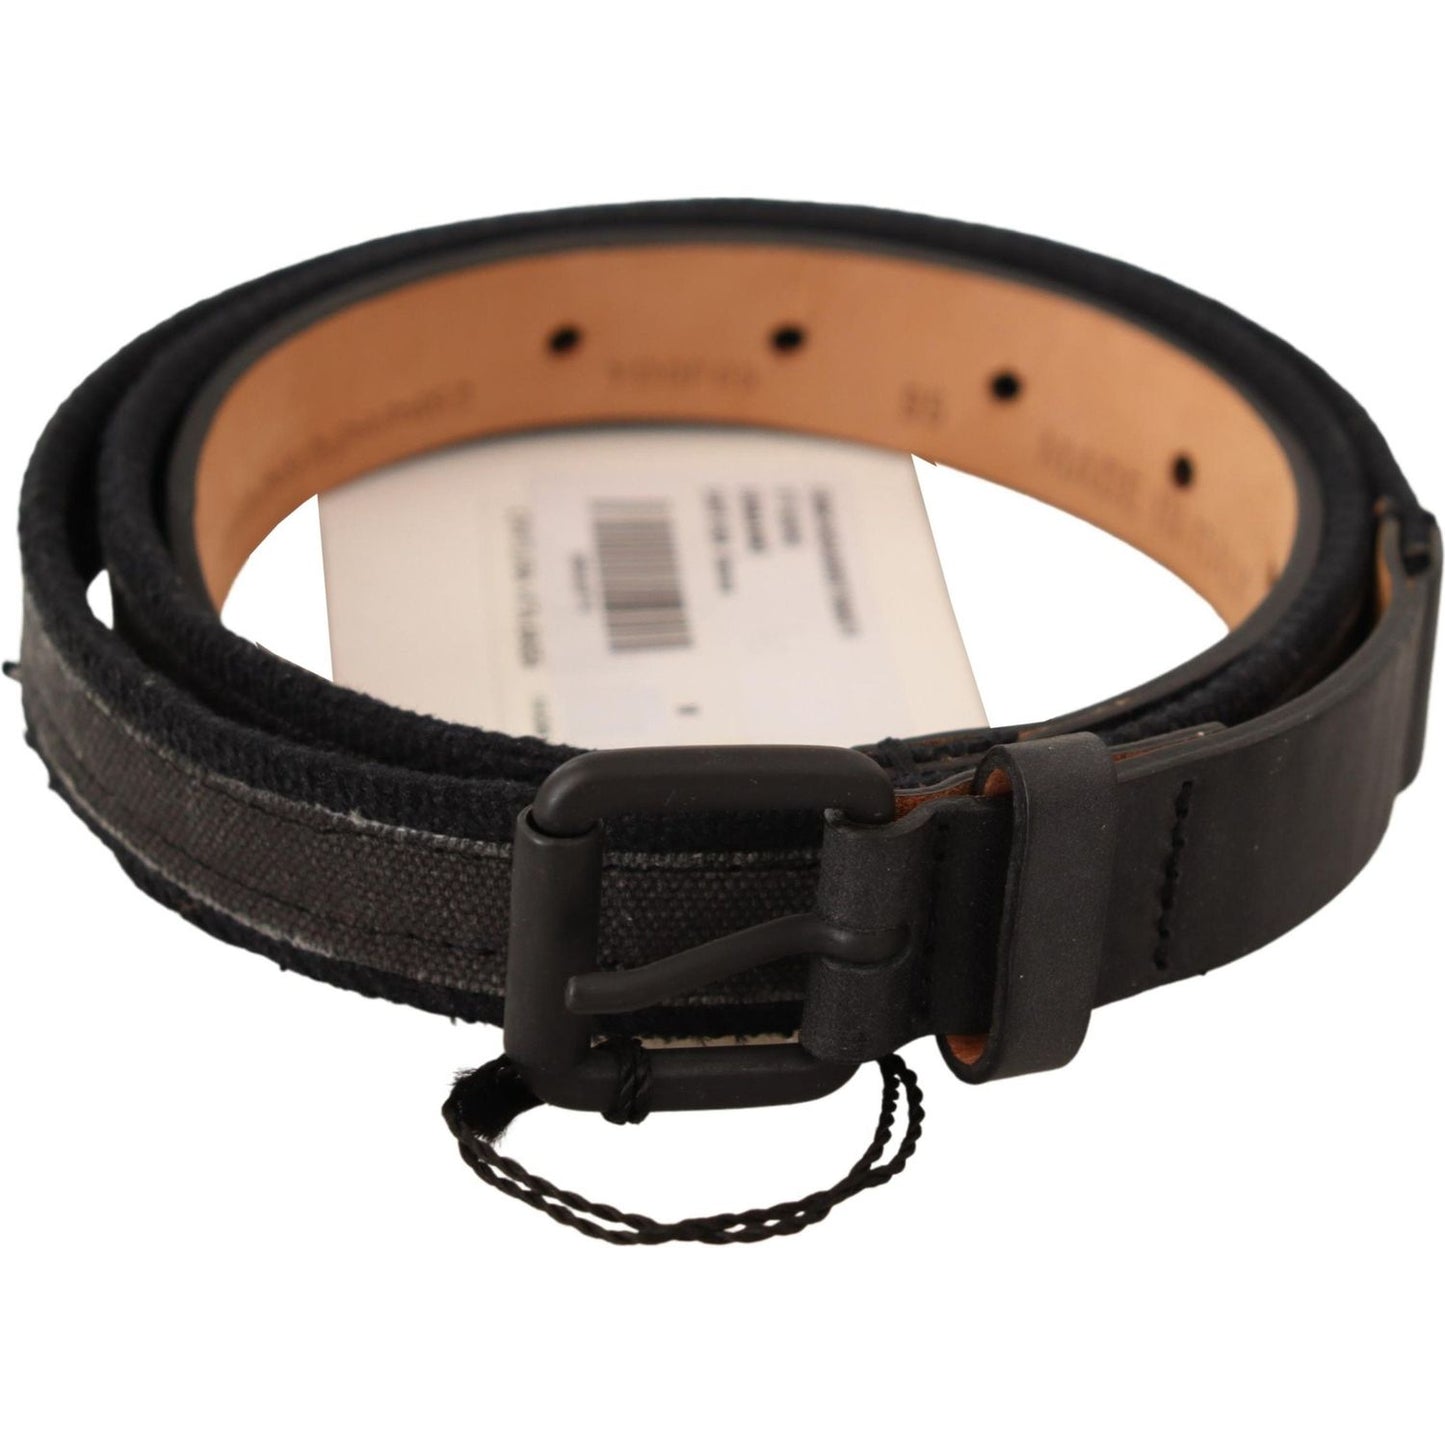 Ermanno Scervino Classic Black Leather Belt with Buckle Fastening black-leather-logo-buckle-waist-women-belt IMG_7026-738fc847-950.jpg